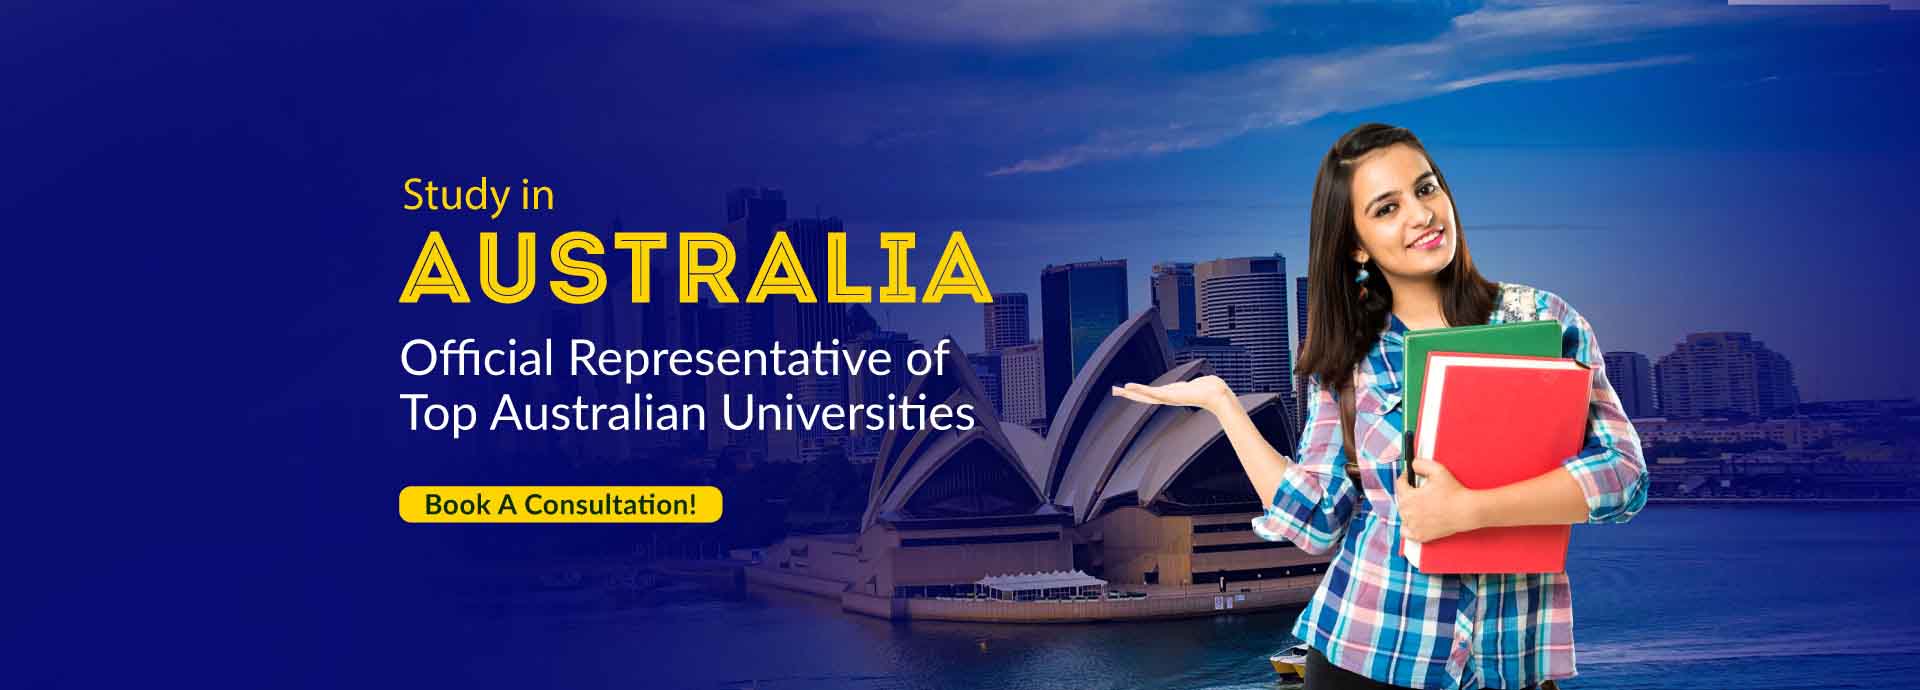 Study in Australia Banner